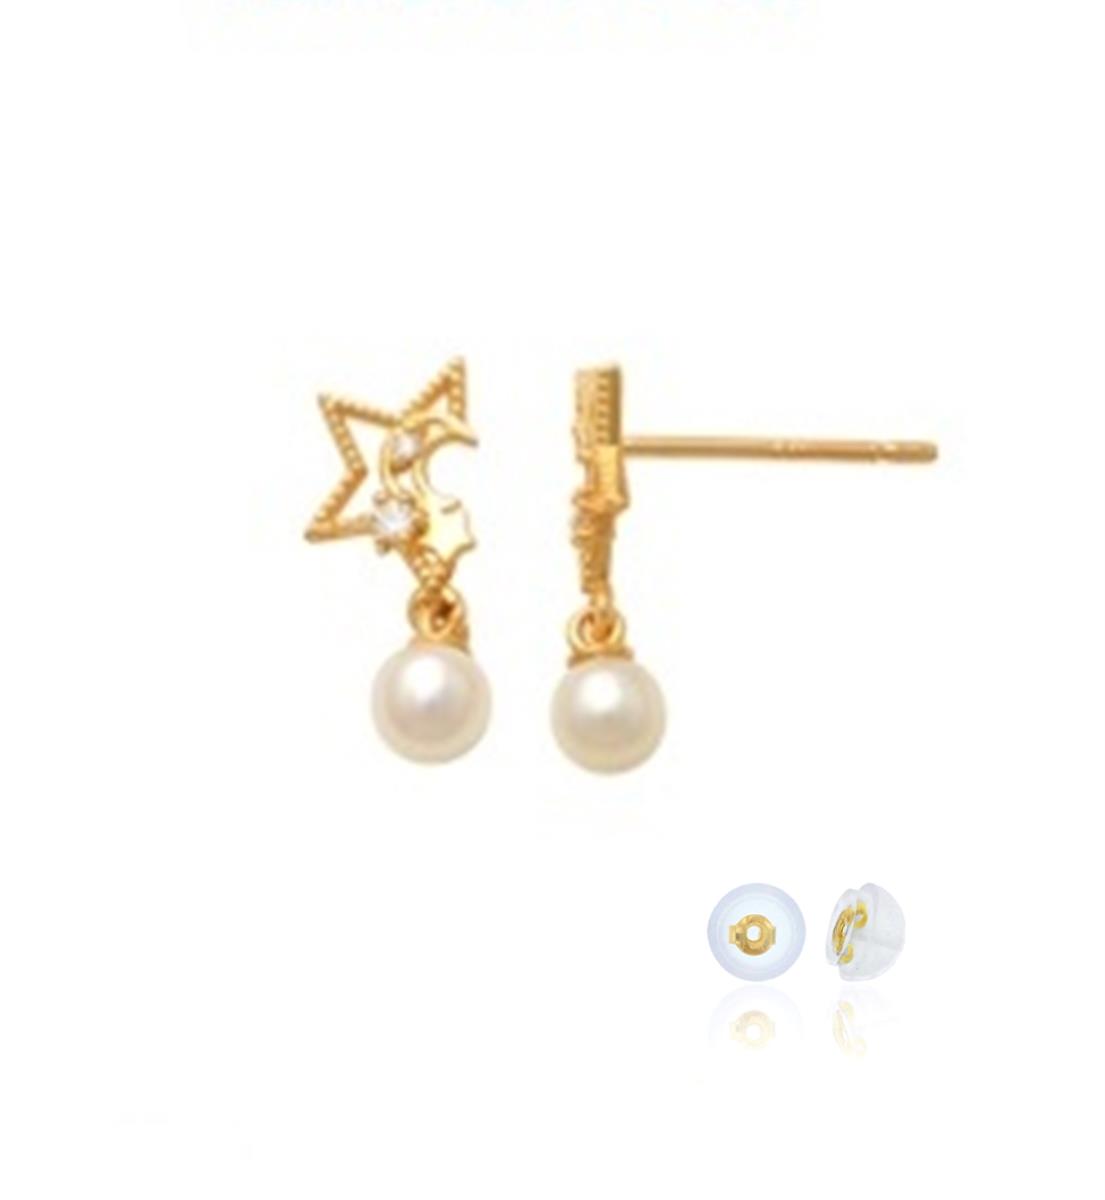 10K Yellow Gold Star & Moon Pearl Diamondcut Stud Earring with Silicone Back